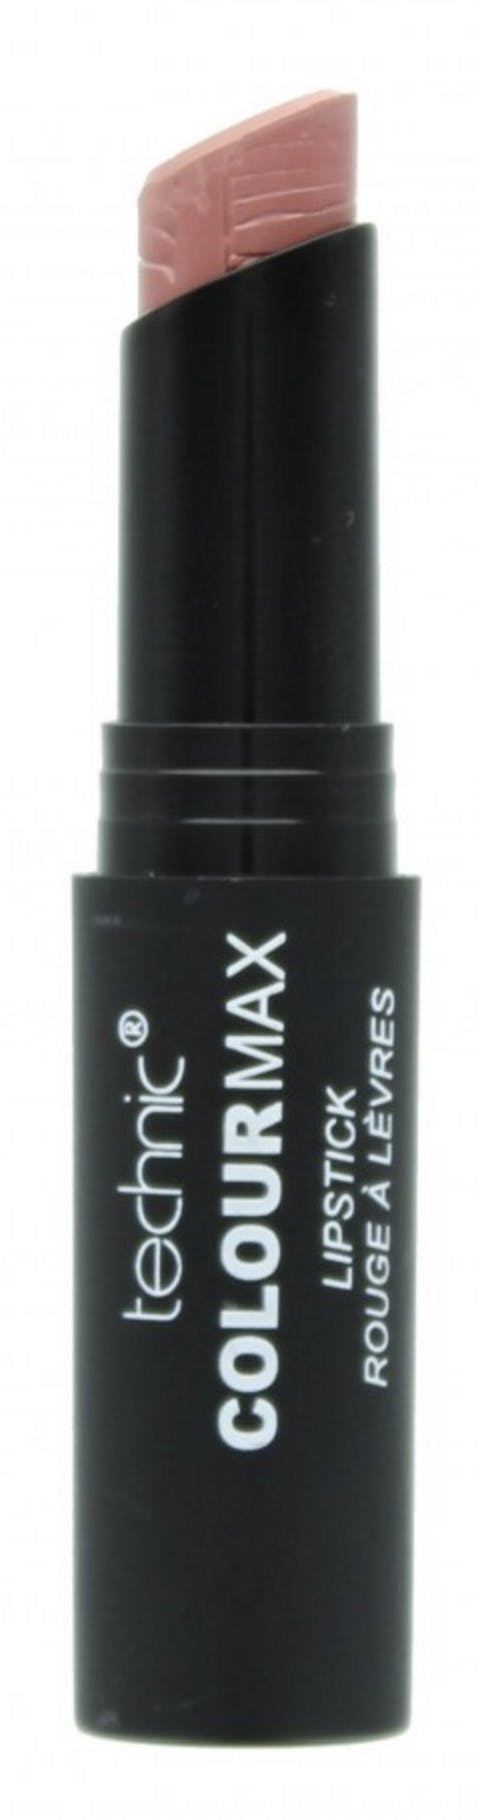 Technic Colour Max Lipstick Matte Rumour Has It 3,5 g